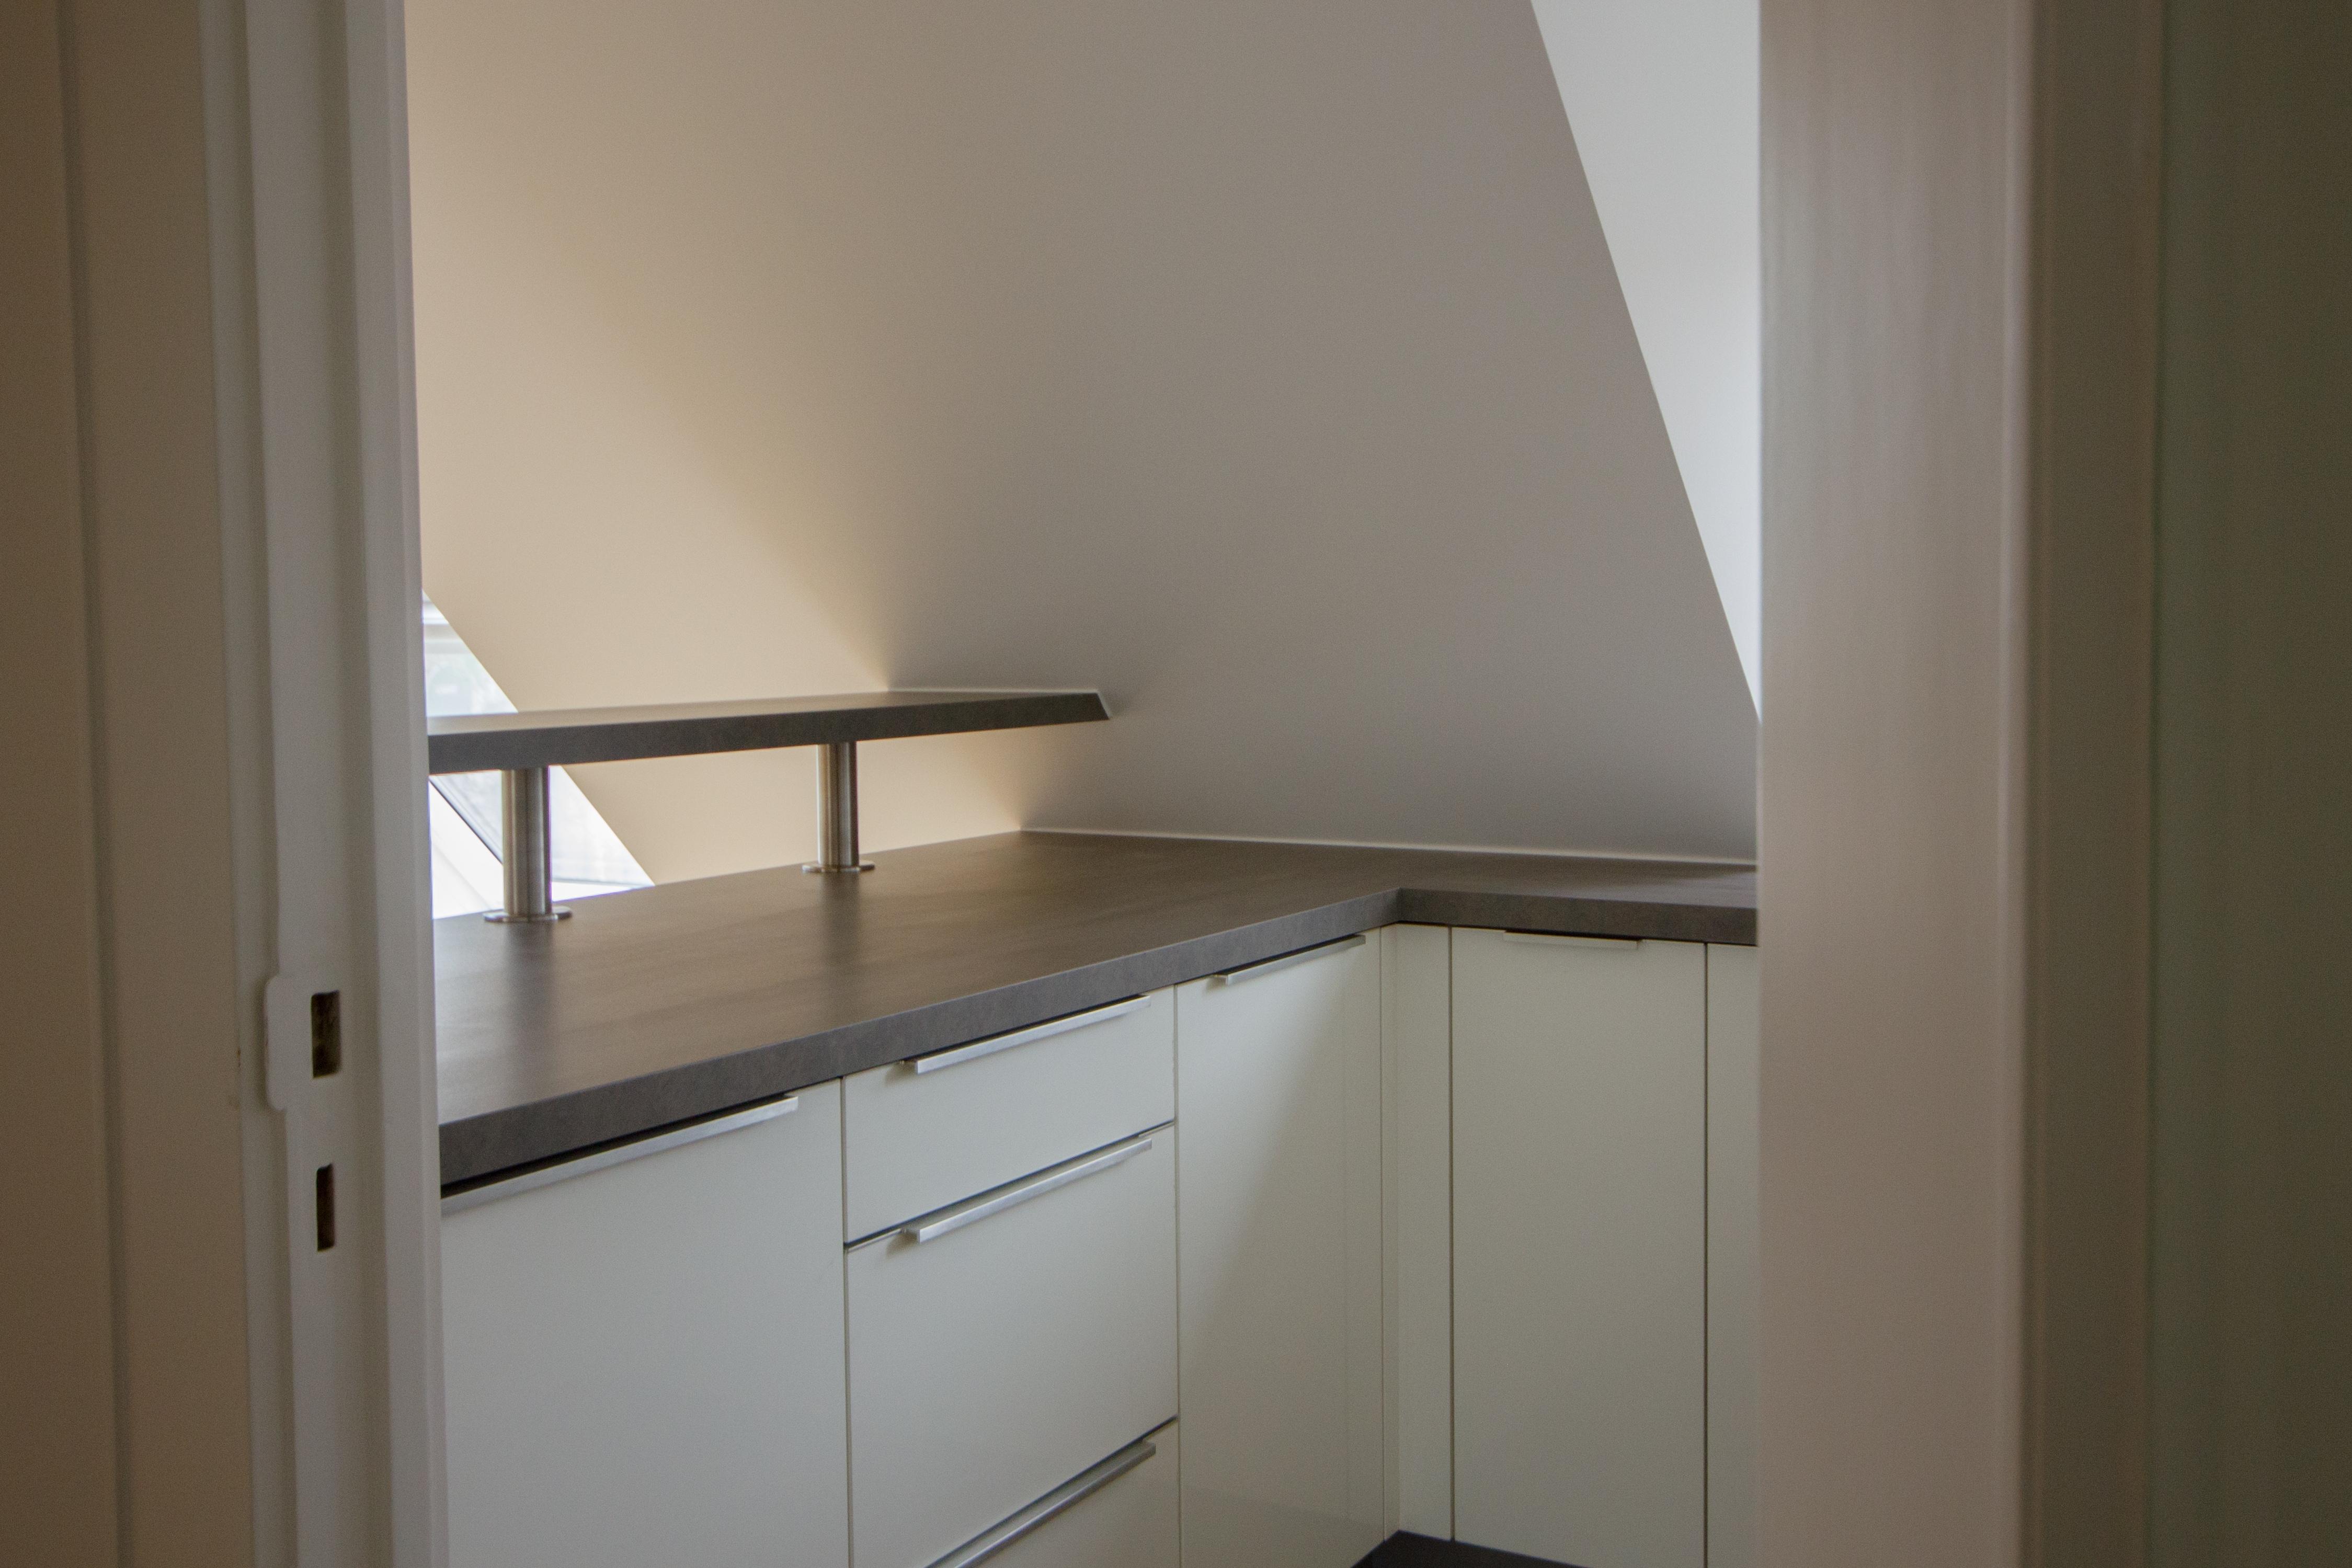 Erweiterung des Dachgeschosses #küche #weißeküche #offeneküche #grauearbeitsplatte ©Kai Lietzke